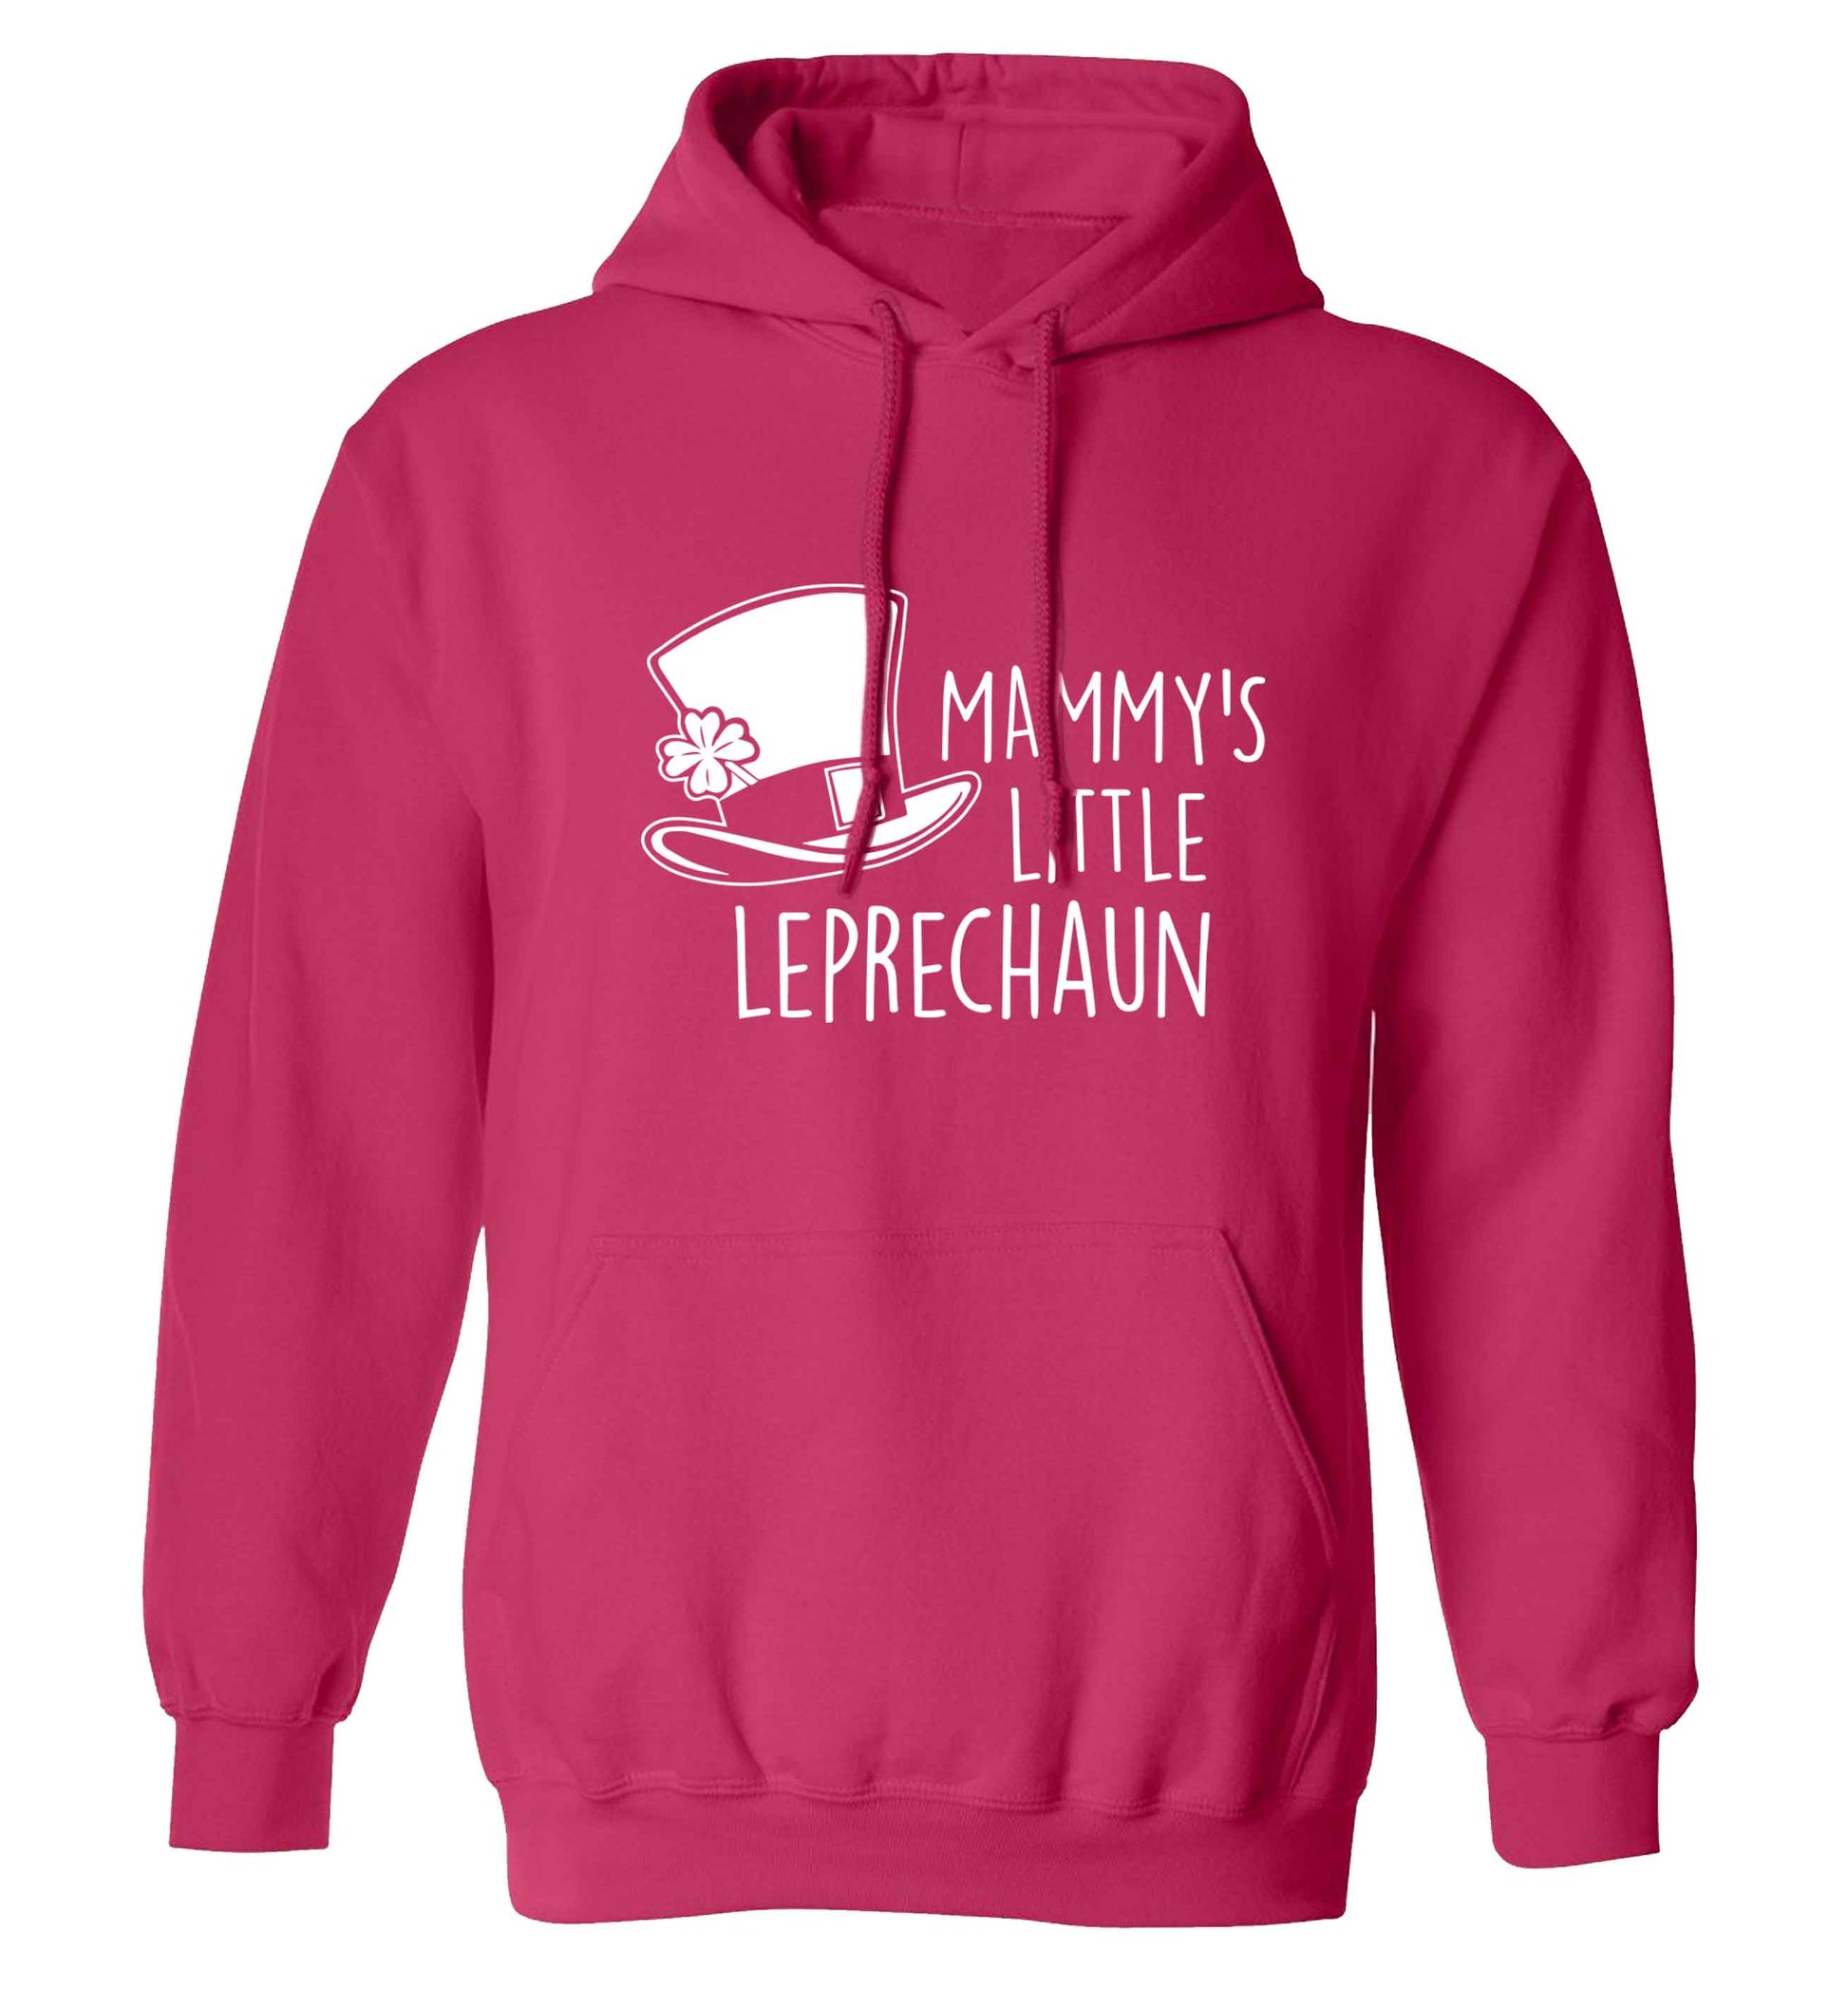 Mammy's little leprechaun adults unisex pink hoodie 2XL